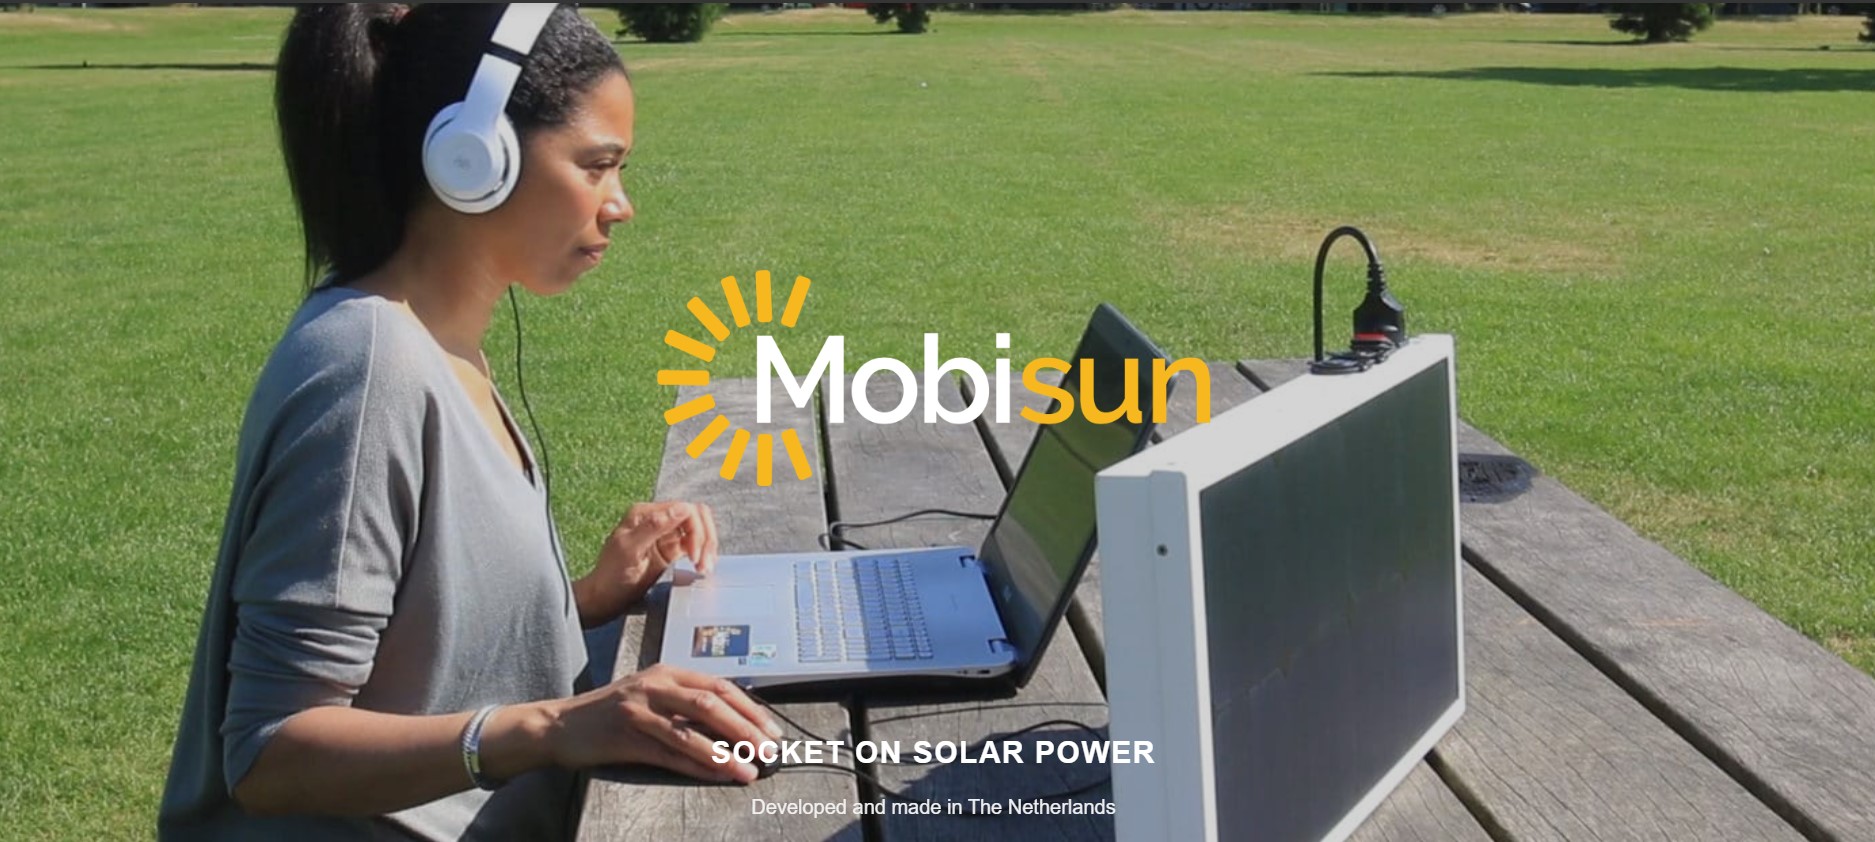 Portable Solar Generator universal laptop power bank 120W in parc